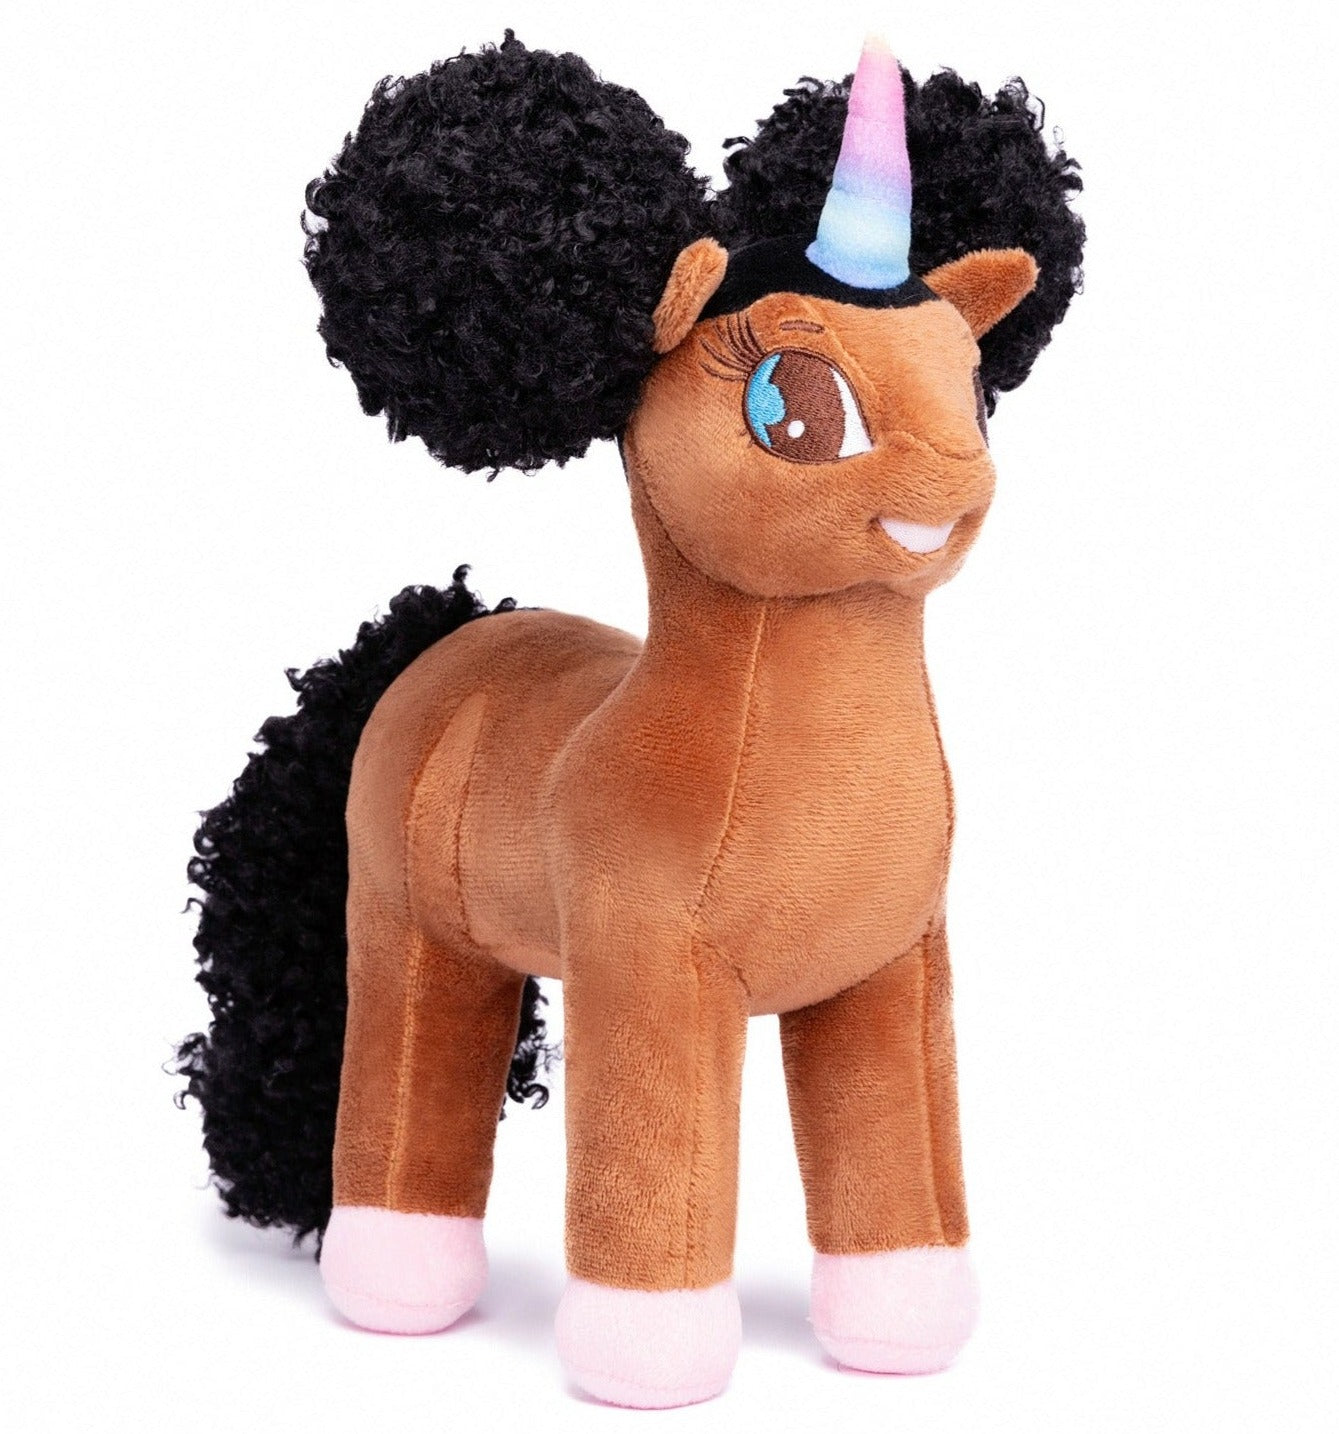 Tiffany Black Unicorn Plush Toy - 12 inch